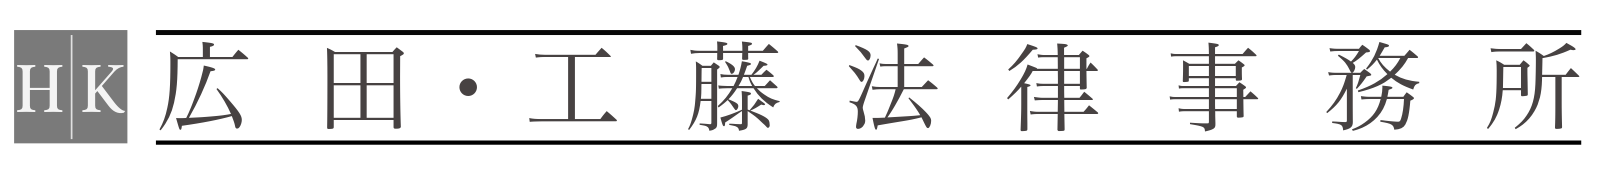 Law Offices of Ryutaro Hirota_logo